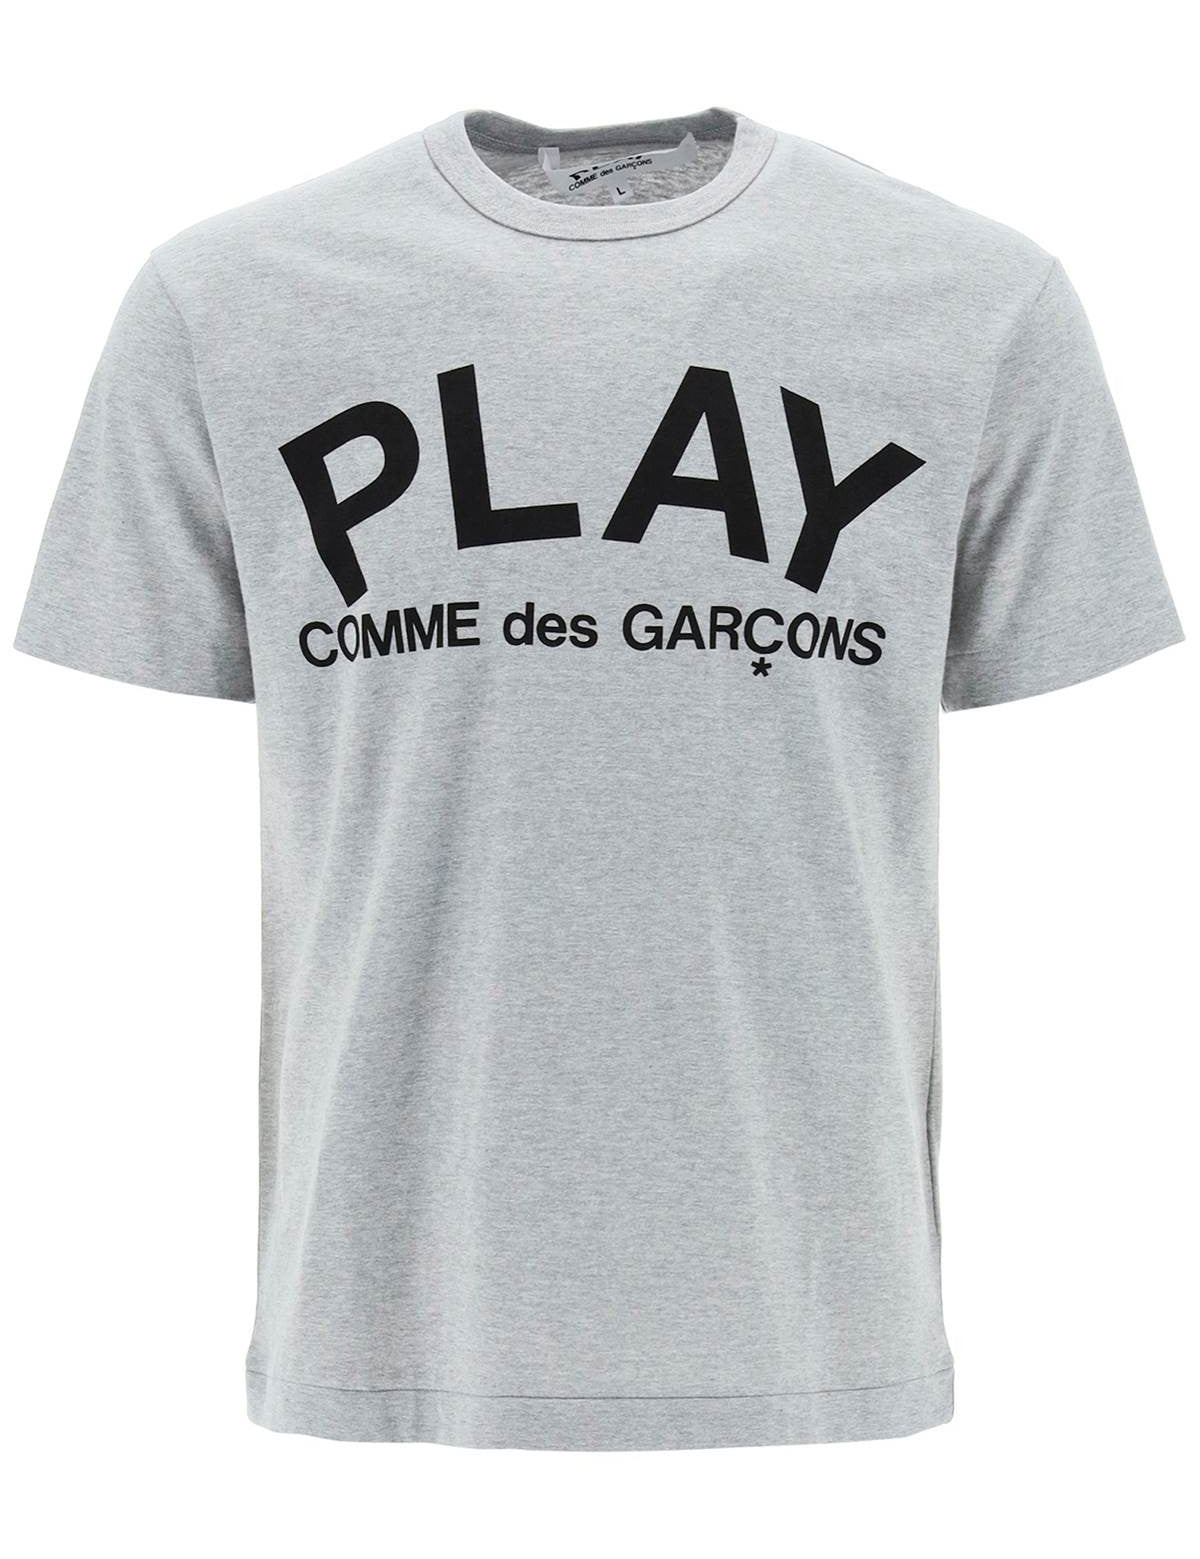 t-shirt-with-play-print.jpg